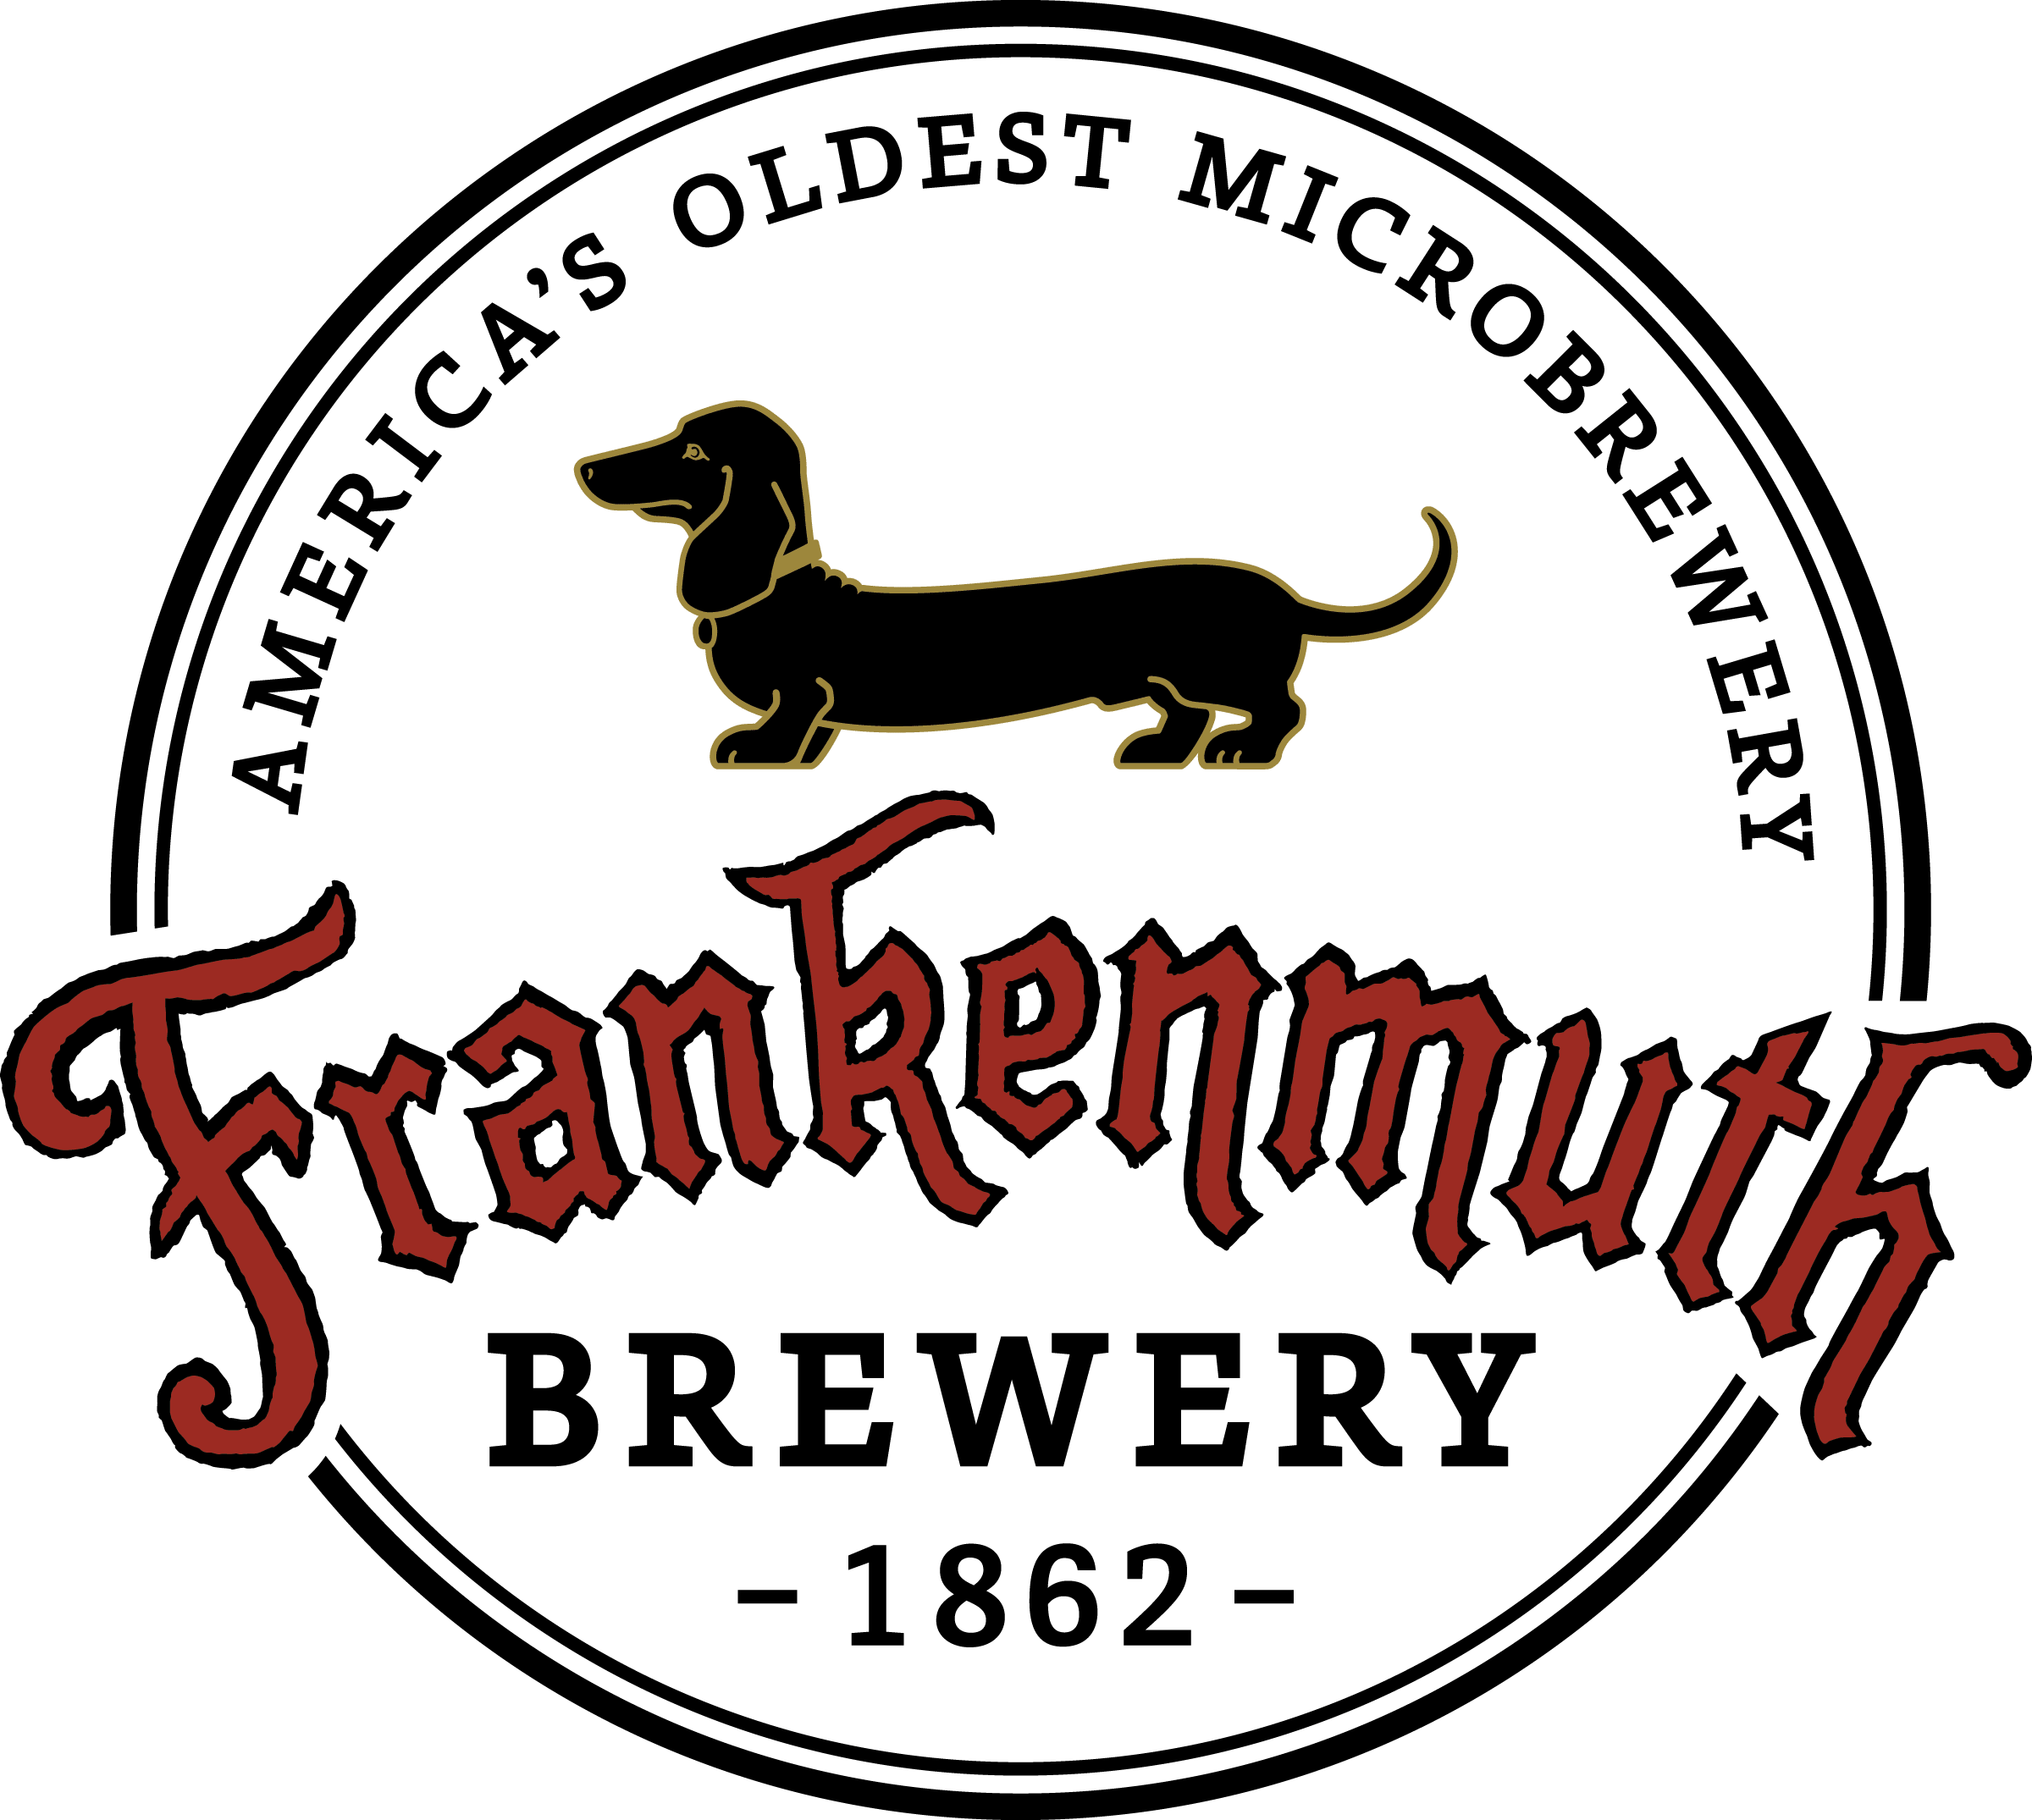 Microbrewery Logo - Oldest Brewery in Michigan |Frankenmuth Brewery